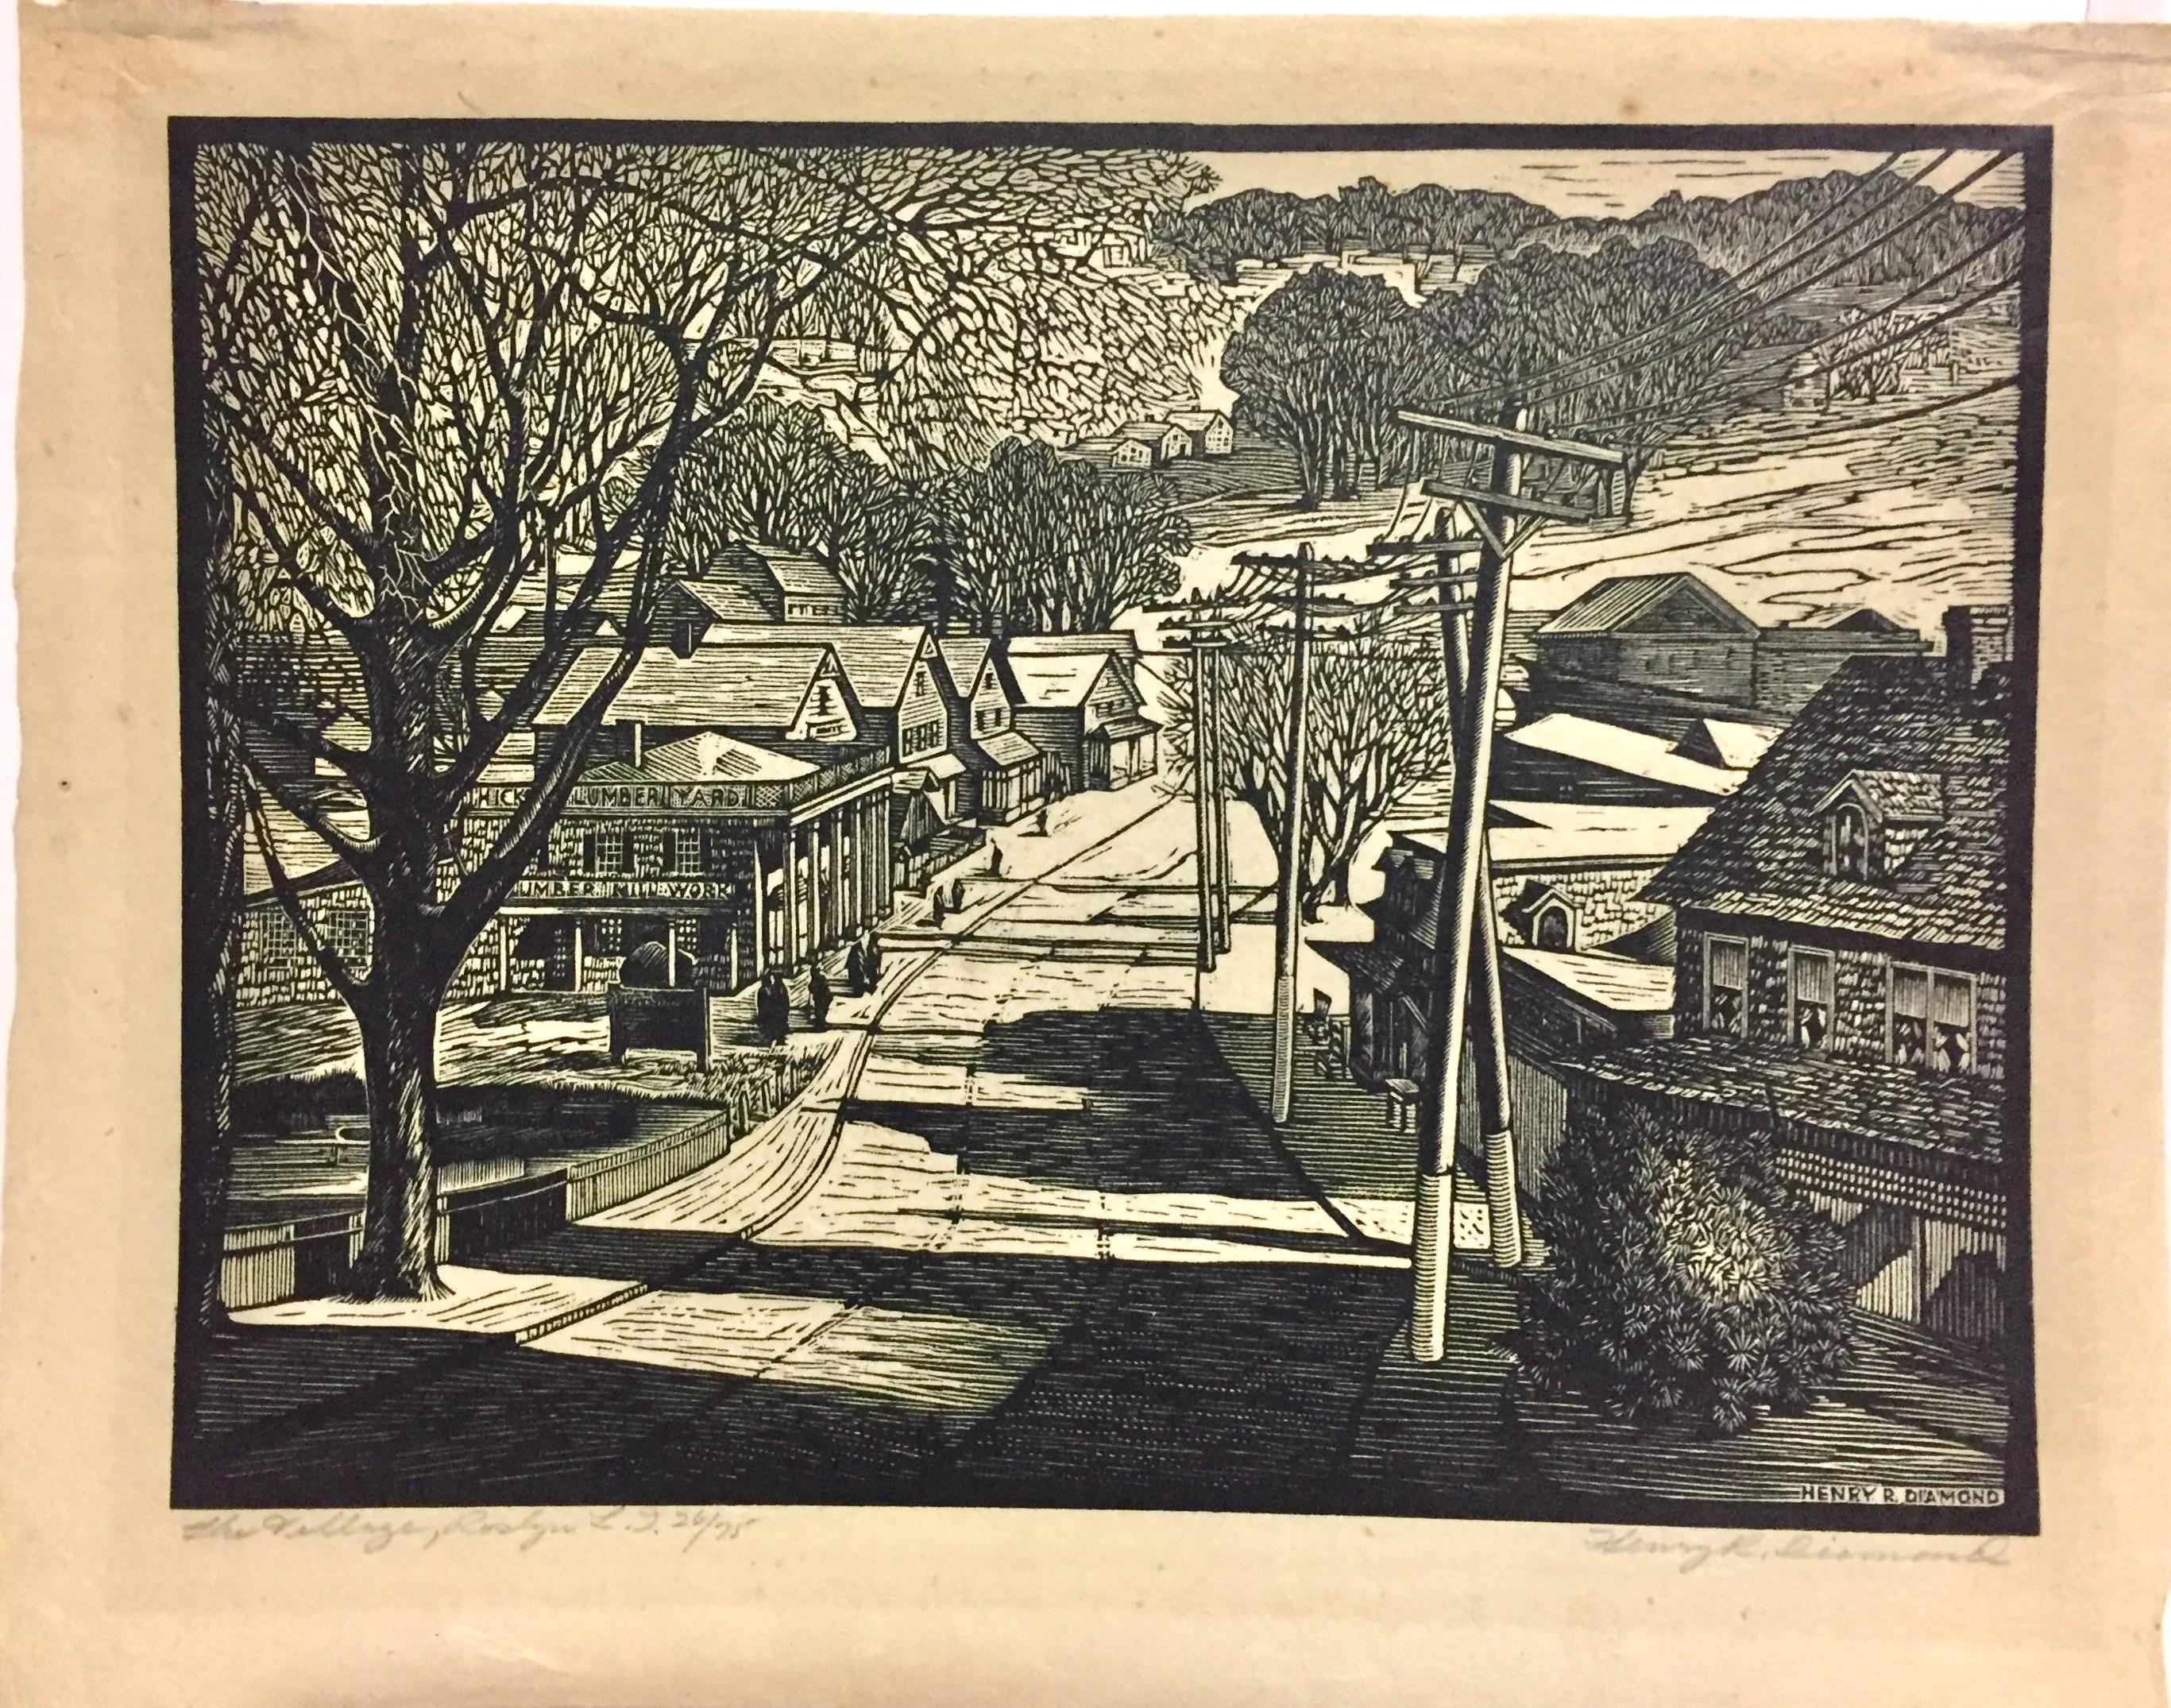 The Village, Roslyn, LI (New York) - Print by Henry R. Diamond